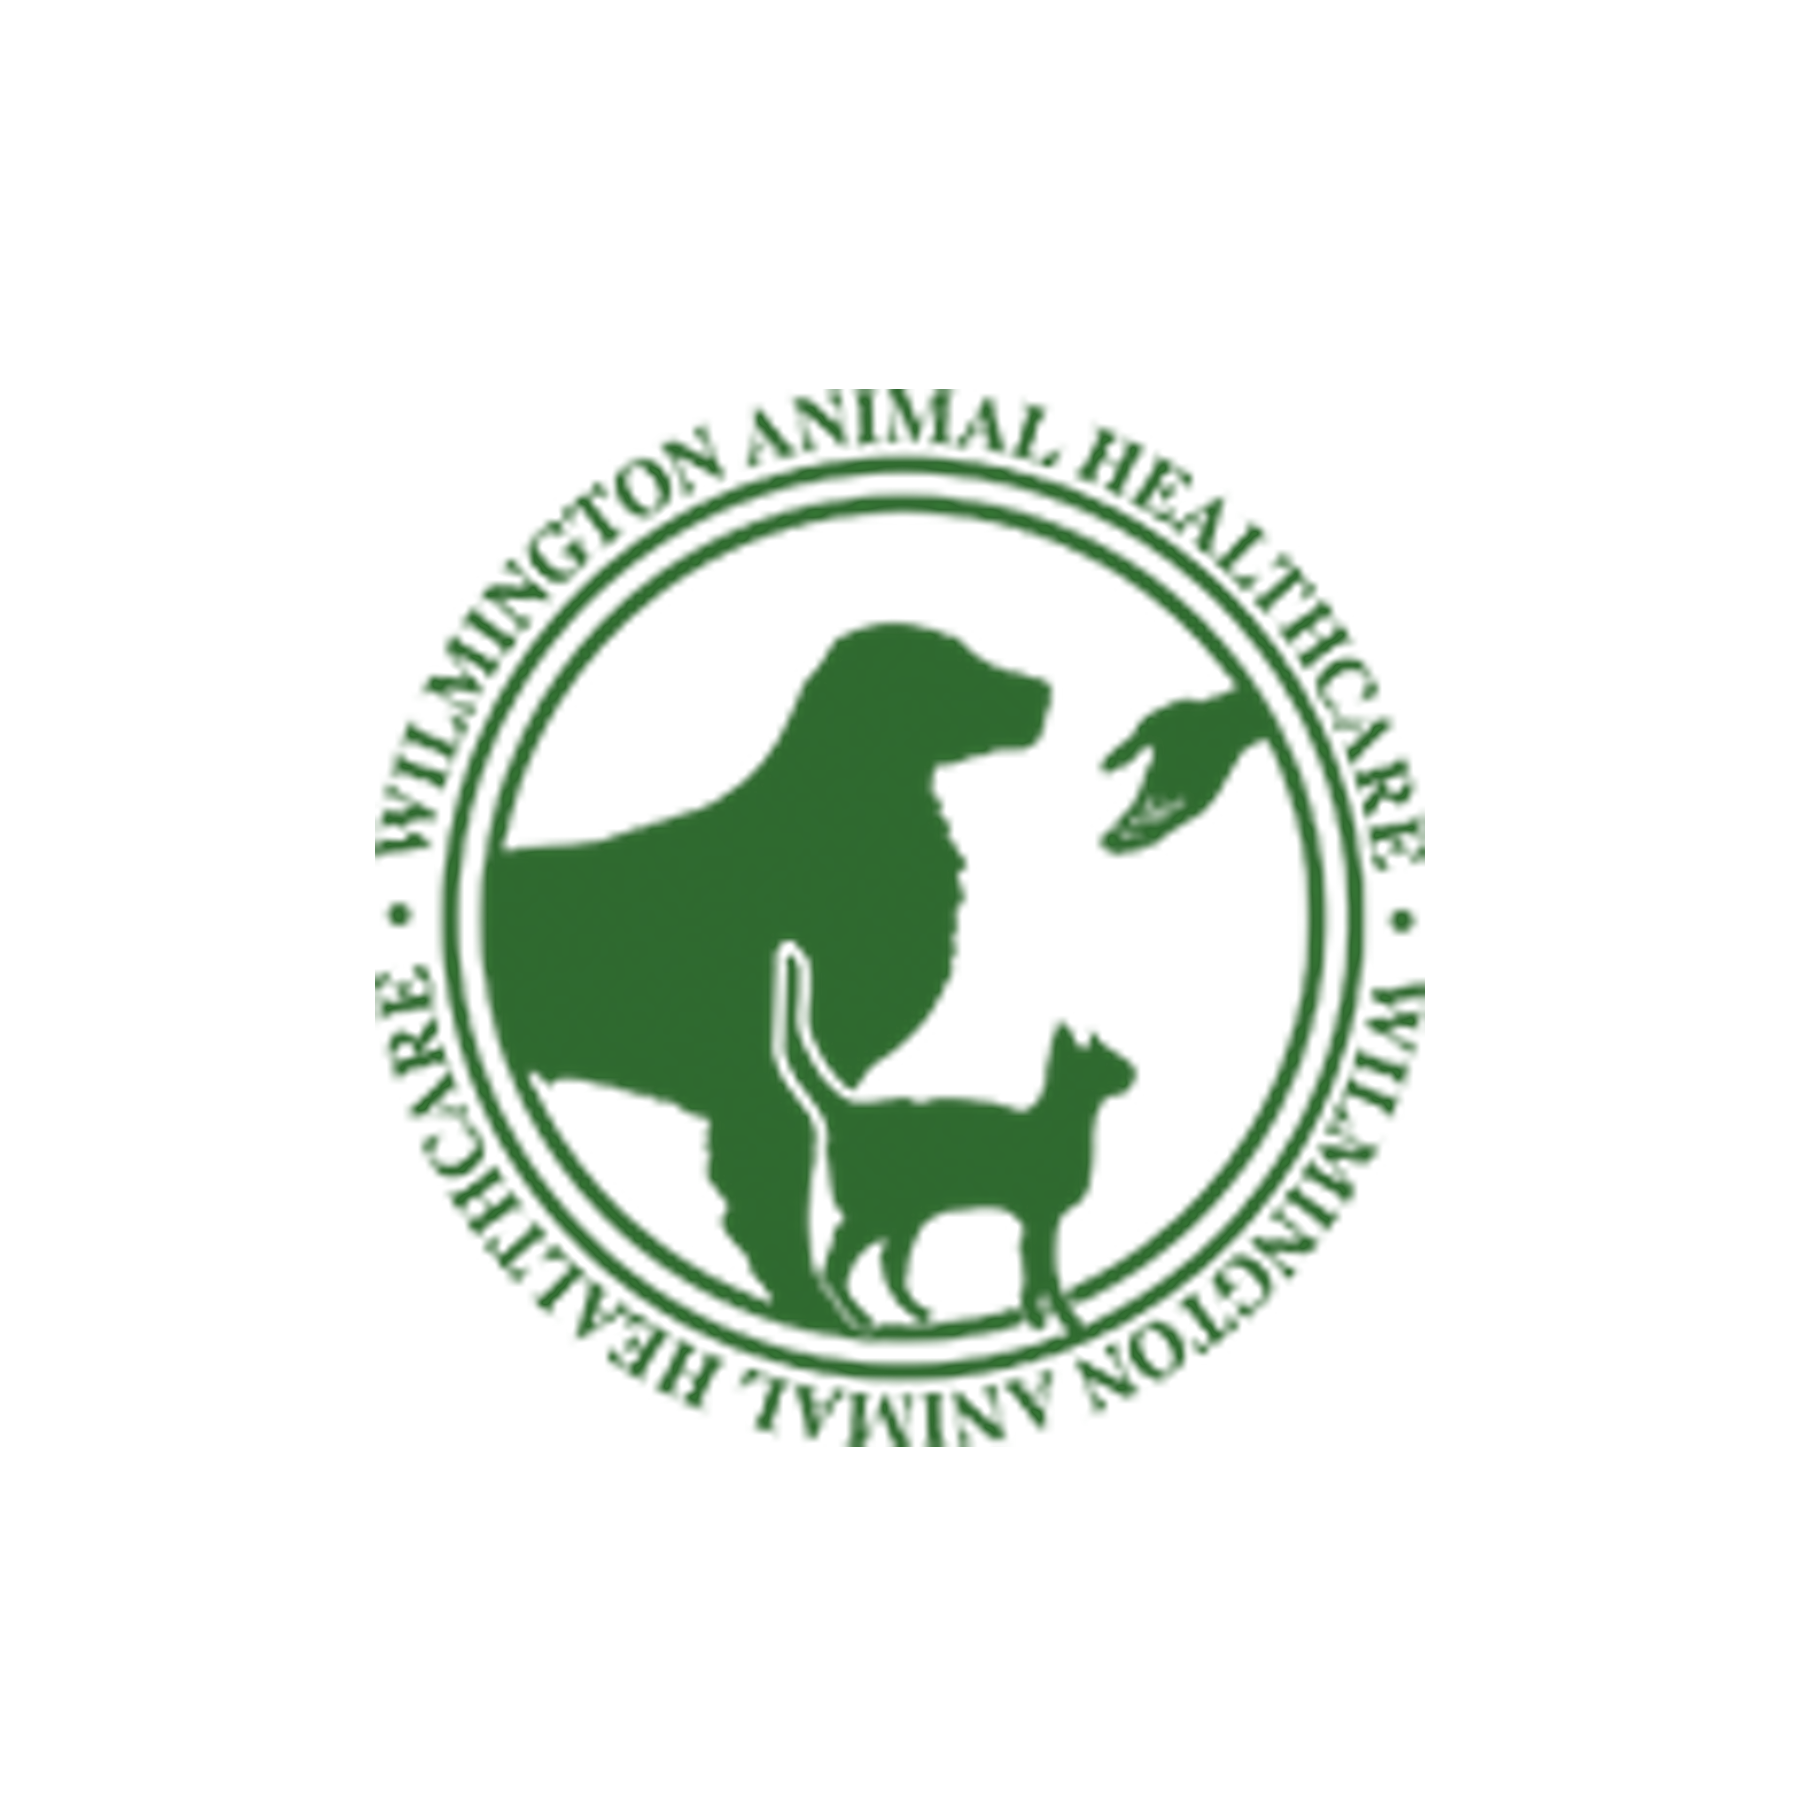 Wilmington Animal Healthcare Veterinary Hospital